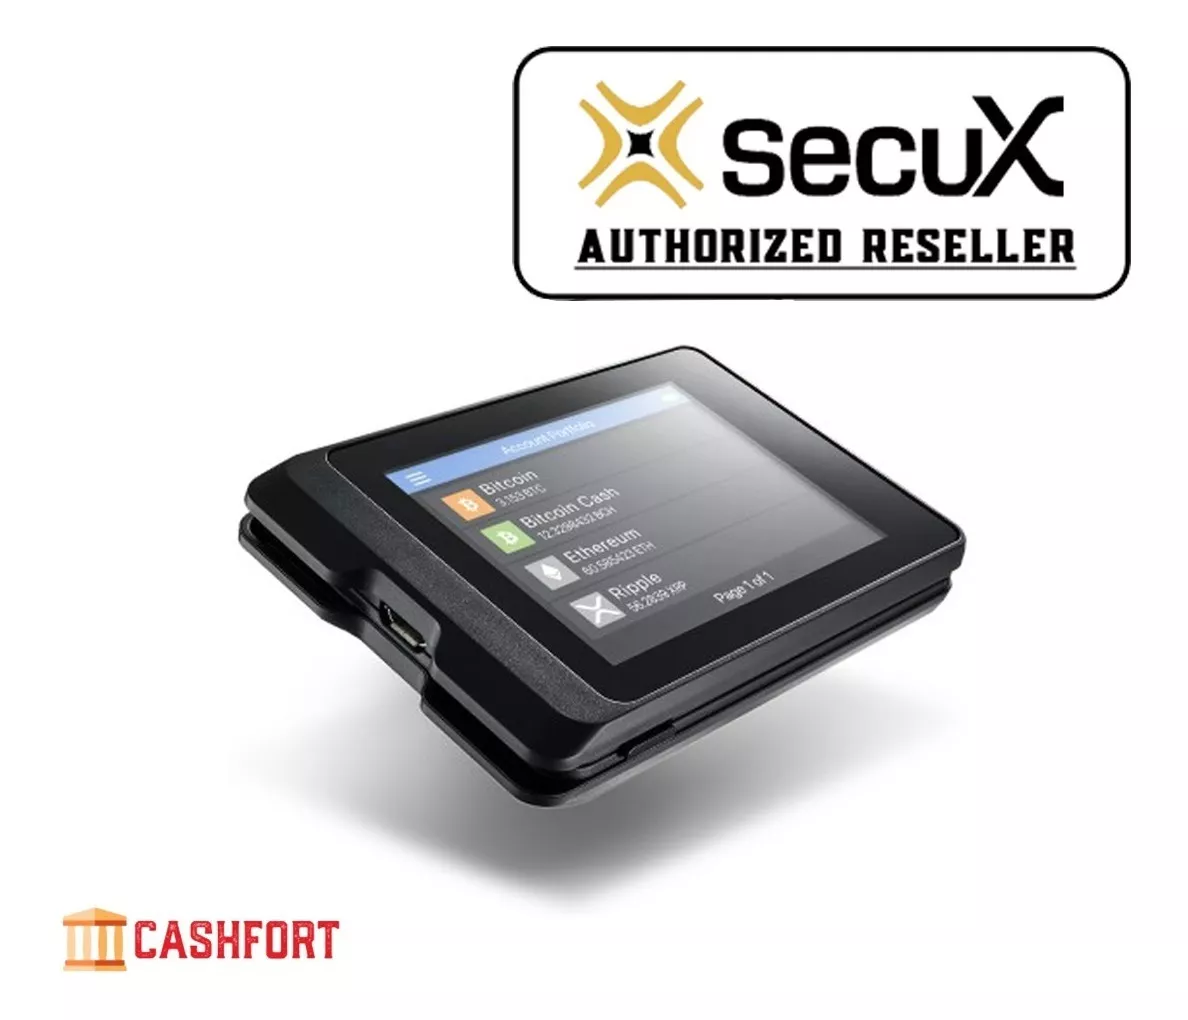 Secux W10 - Revenda Oficial Secux - Safepal/trezor/ledger/